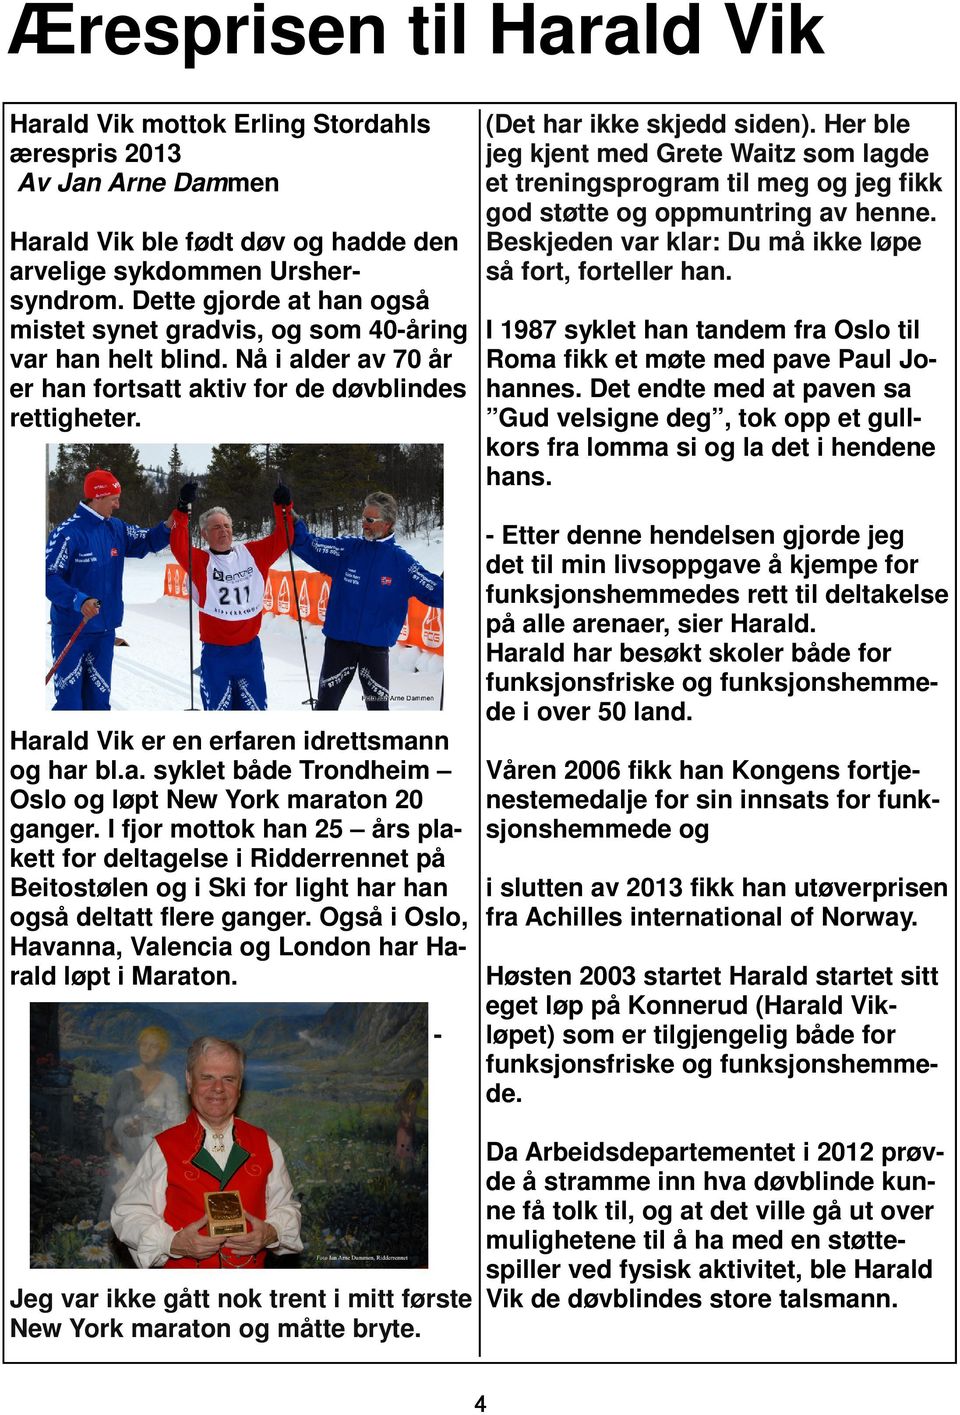 Harald Vik er en erfaren idrettsmann og har bl.a. syklet både Trondheim Oslo og løpt New York maraton 20 ganger.